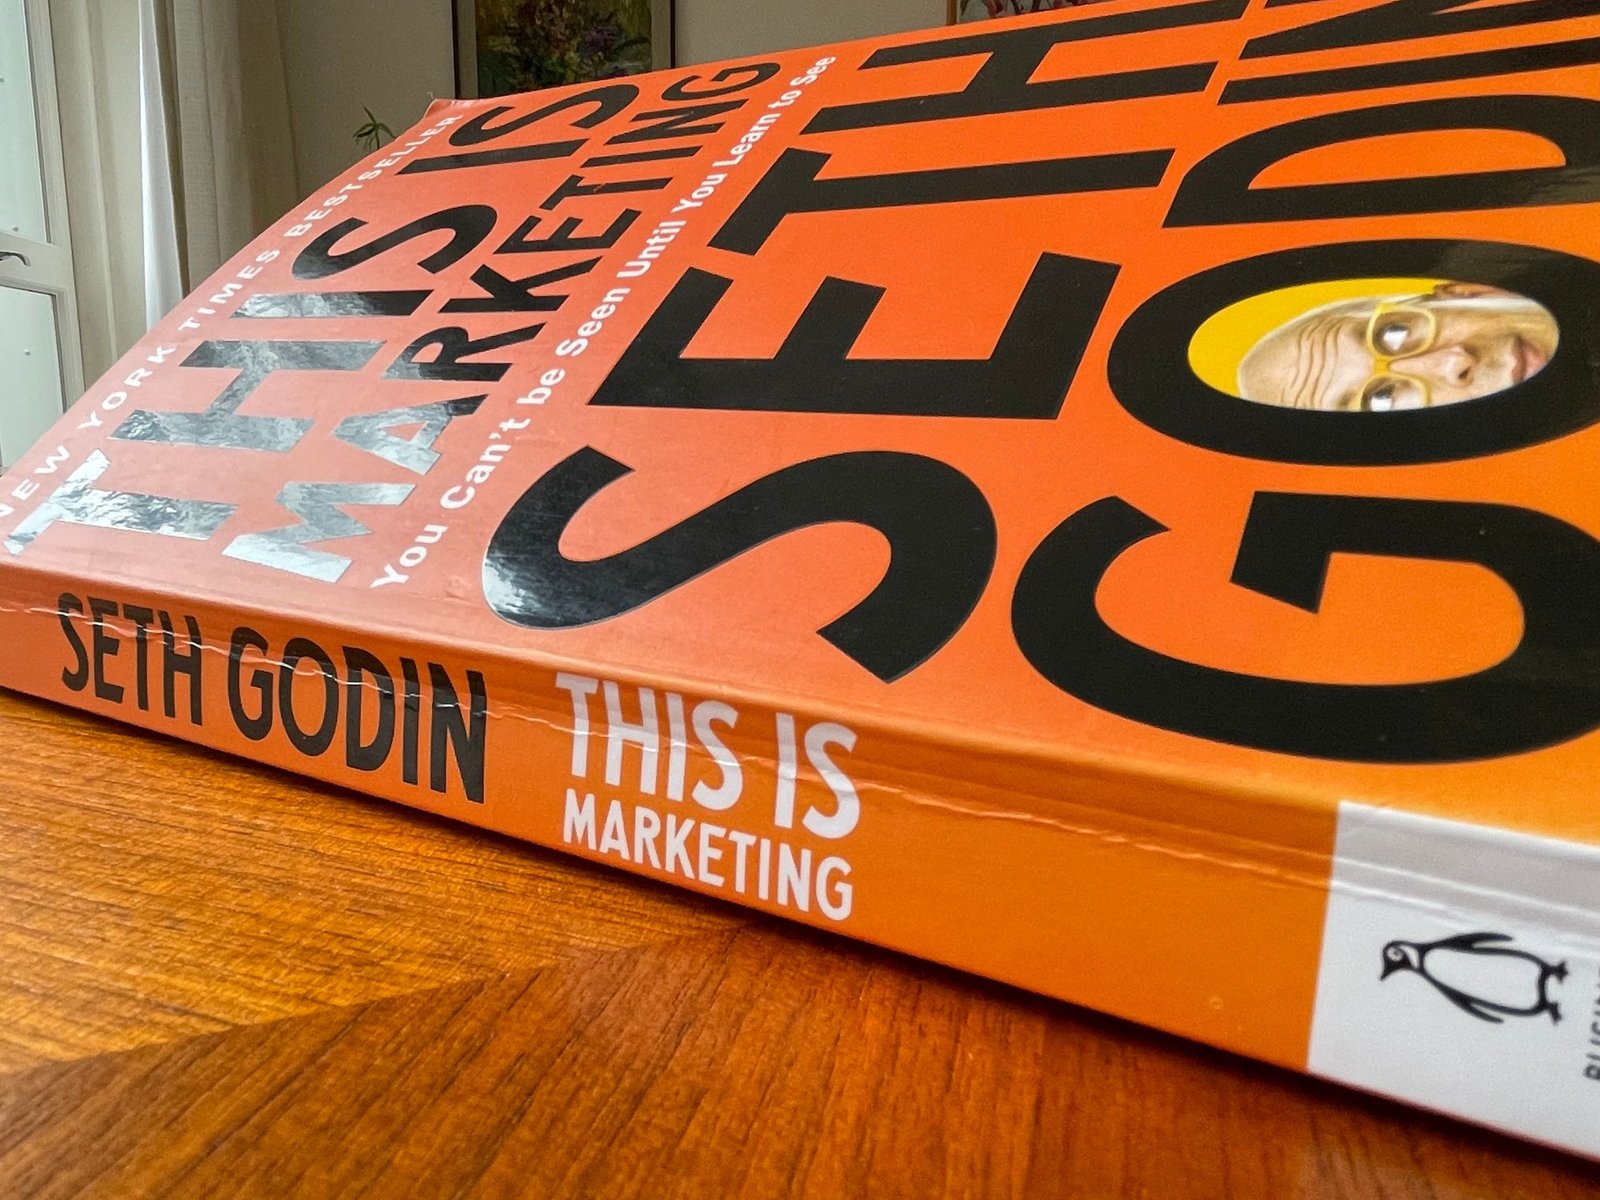 Boekbespreking: “This Is Marketing” van Seth Godin